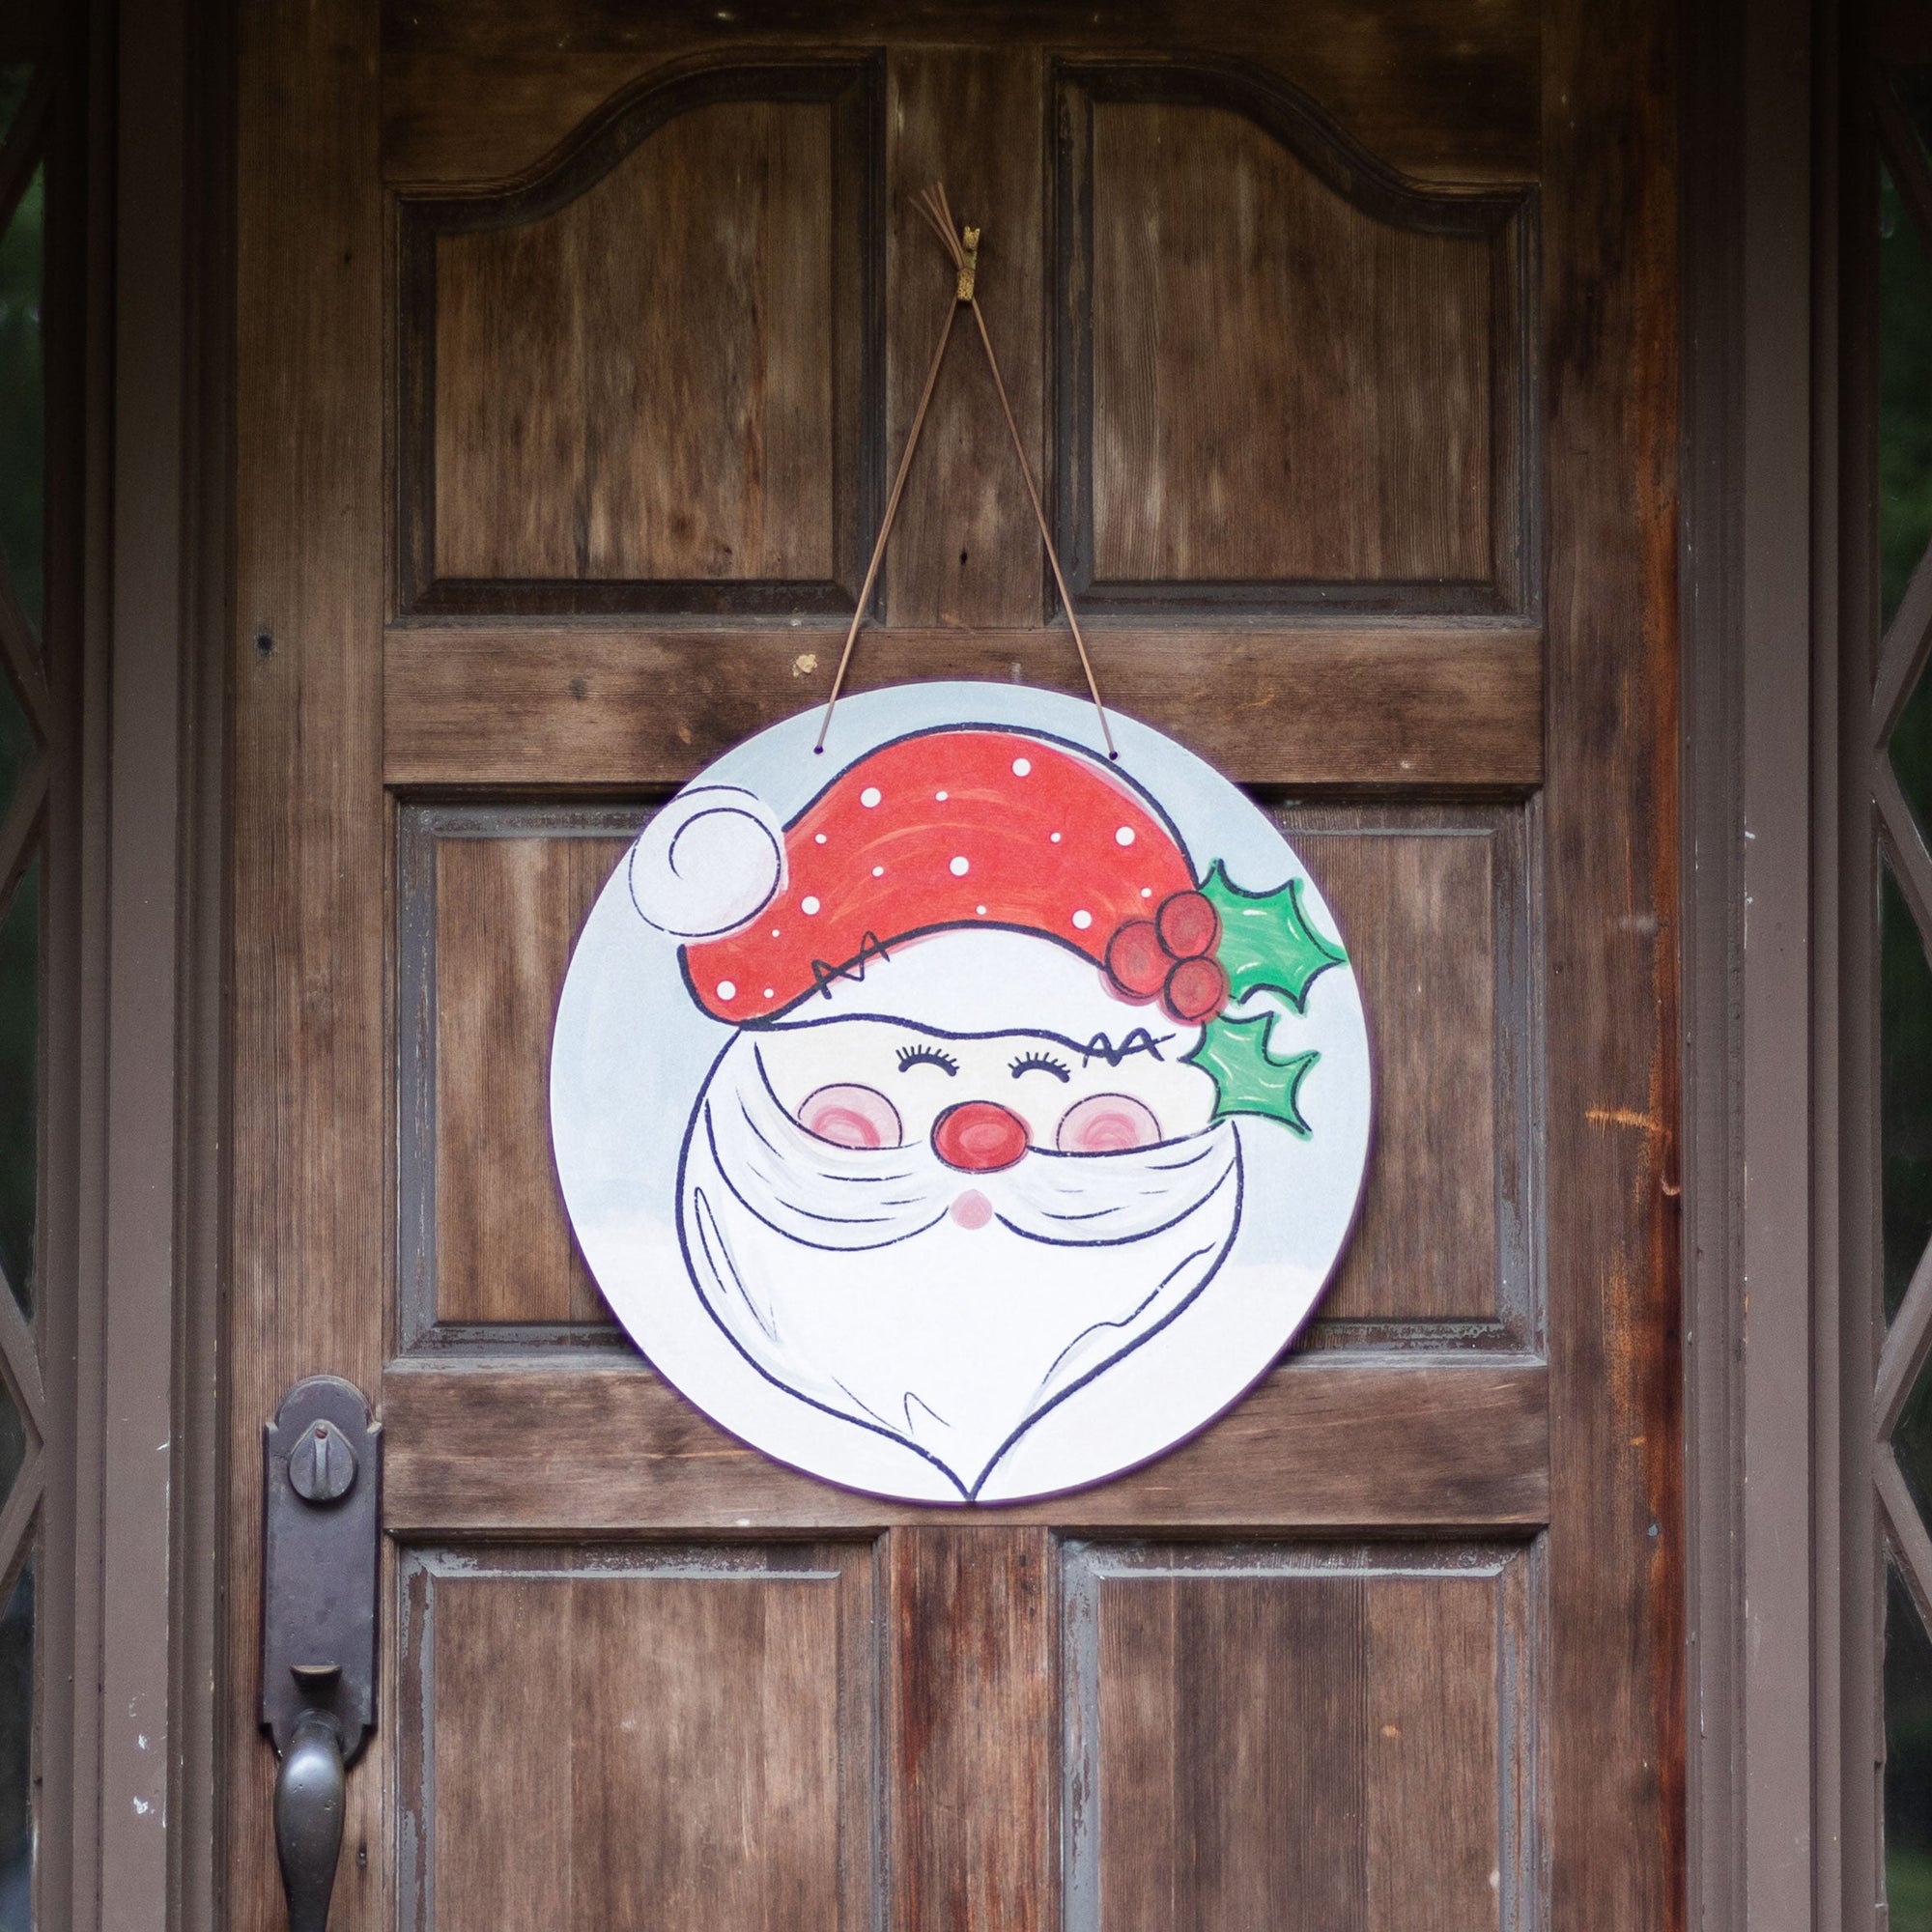 Front View. Christmas Door Hanger, Whimsy Santa Outdoor Ornament/Decor The WAREHOUSE Studio 